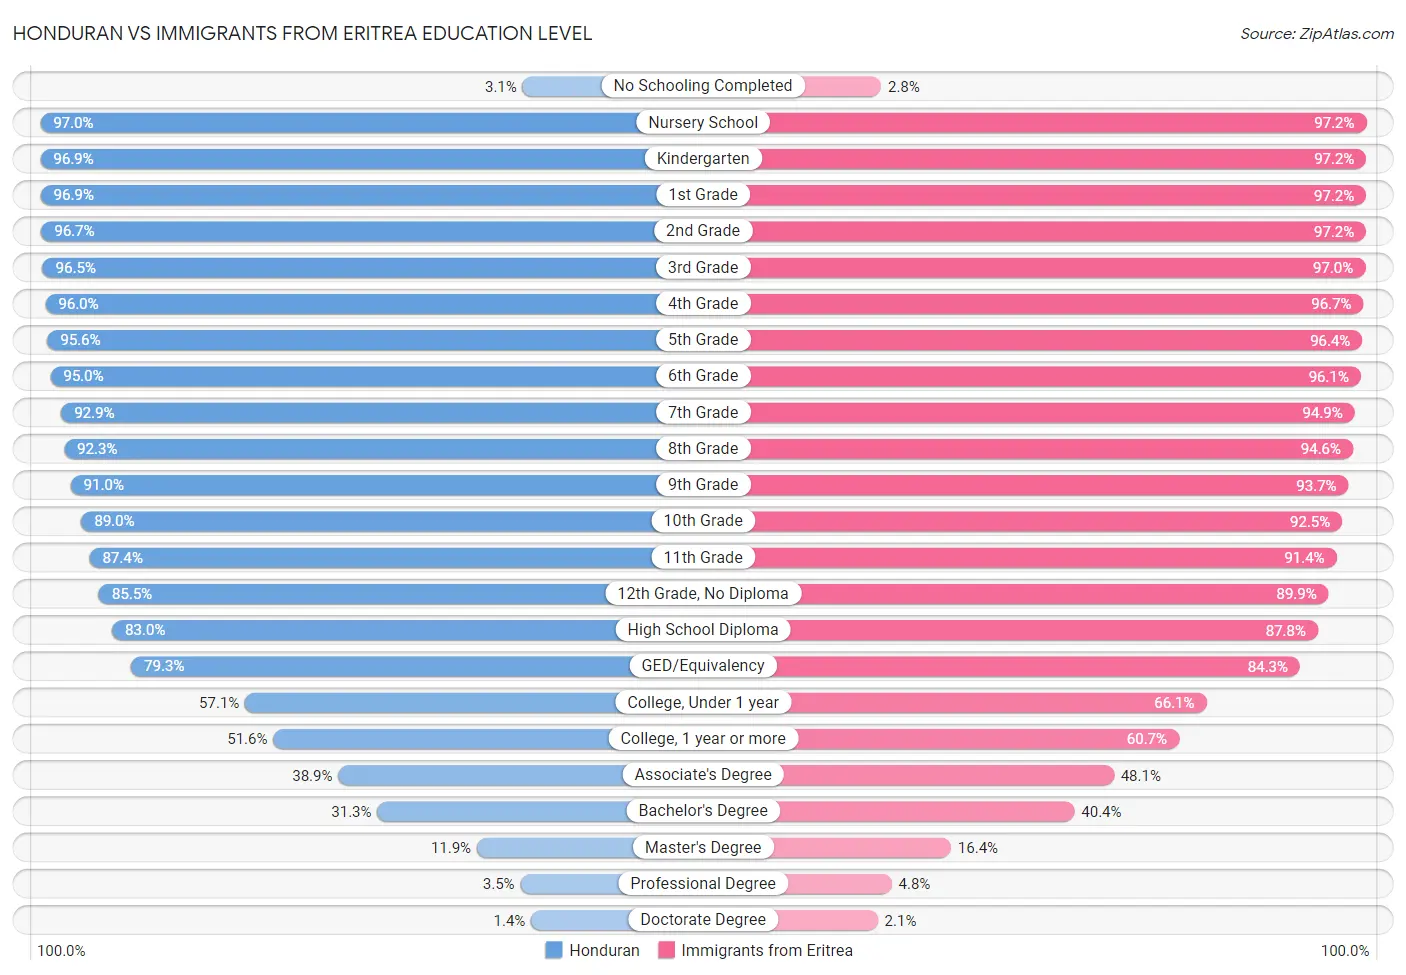 Honduran vs Immigrants from Eritrea Education Level